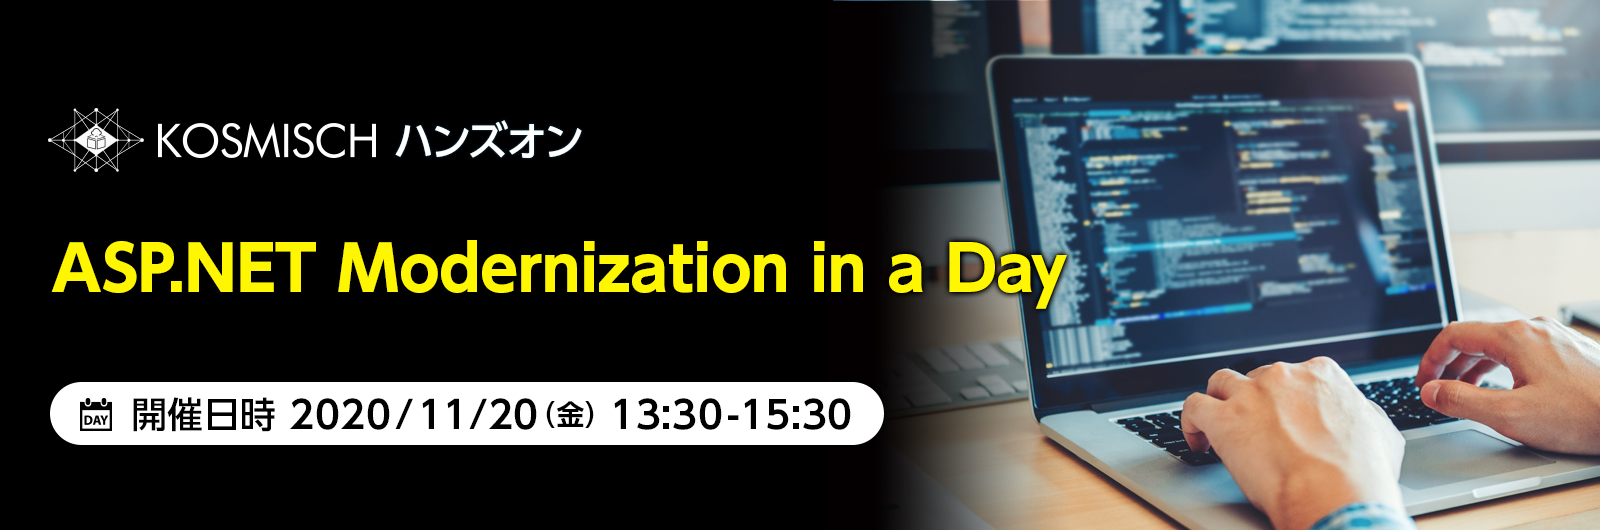 .NETアプリケーションのAzureへの移行を体験できる「KOSMISCH全国キャラバン」ハンズオンを日本マイクロソフトと共催でオンライン開催